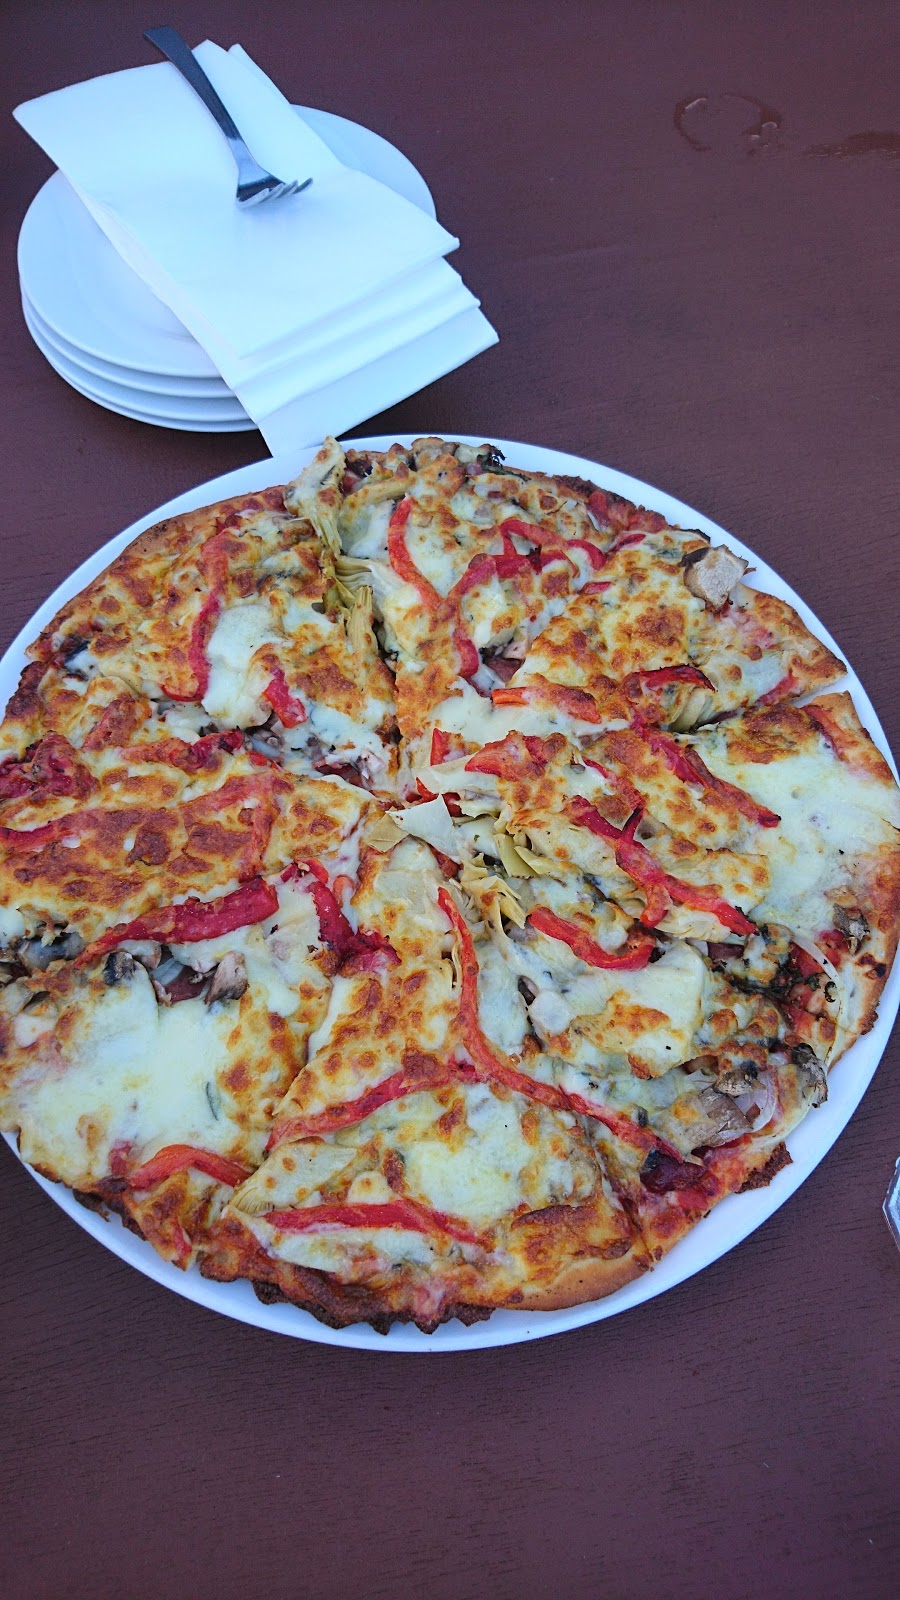 Bella Martinos Italian Restaurant & Pizzeria | restaurant | 65 Perry St, Bundaberg North QLD 4670, Australia | 0741518671 OR +61 7 4151 8671